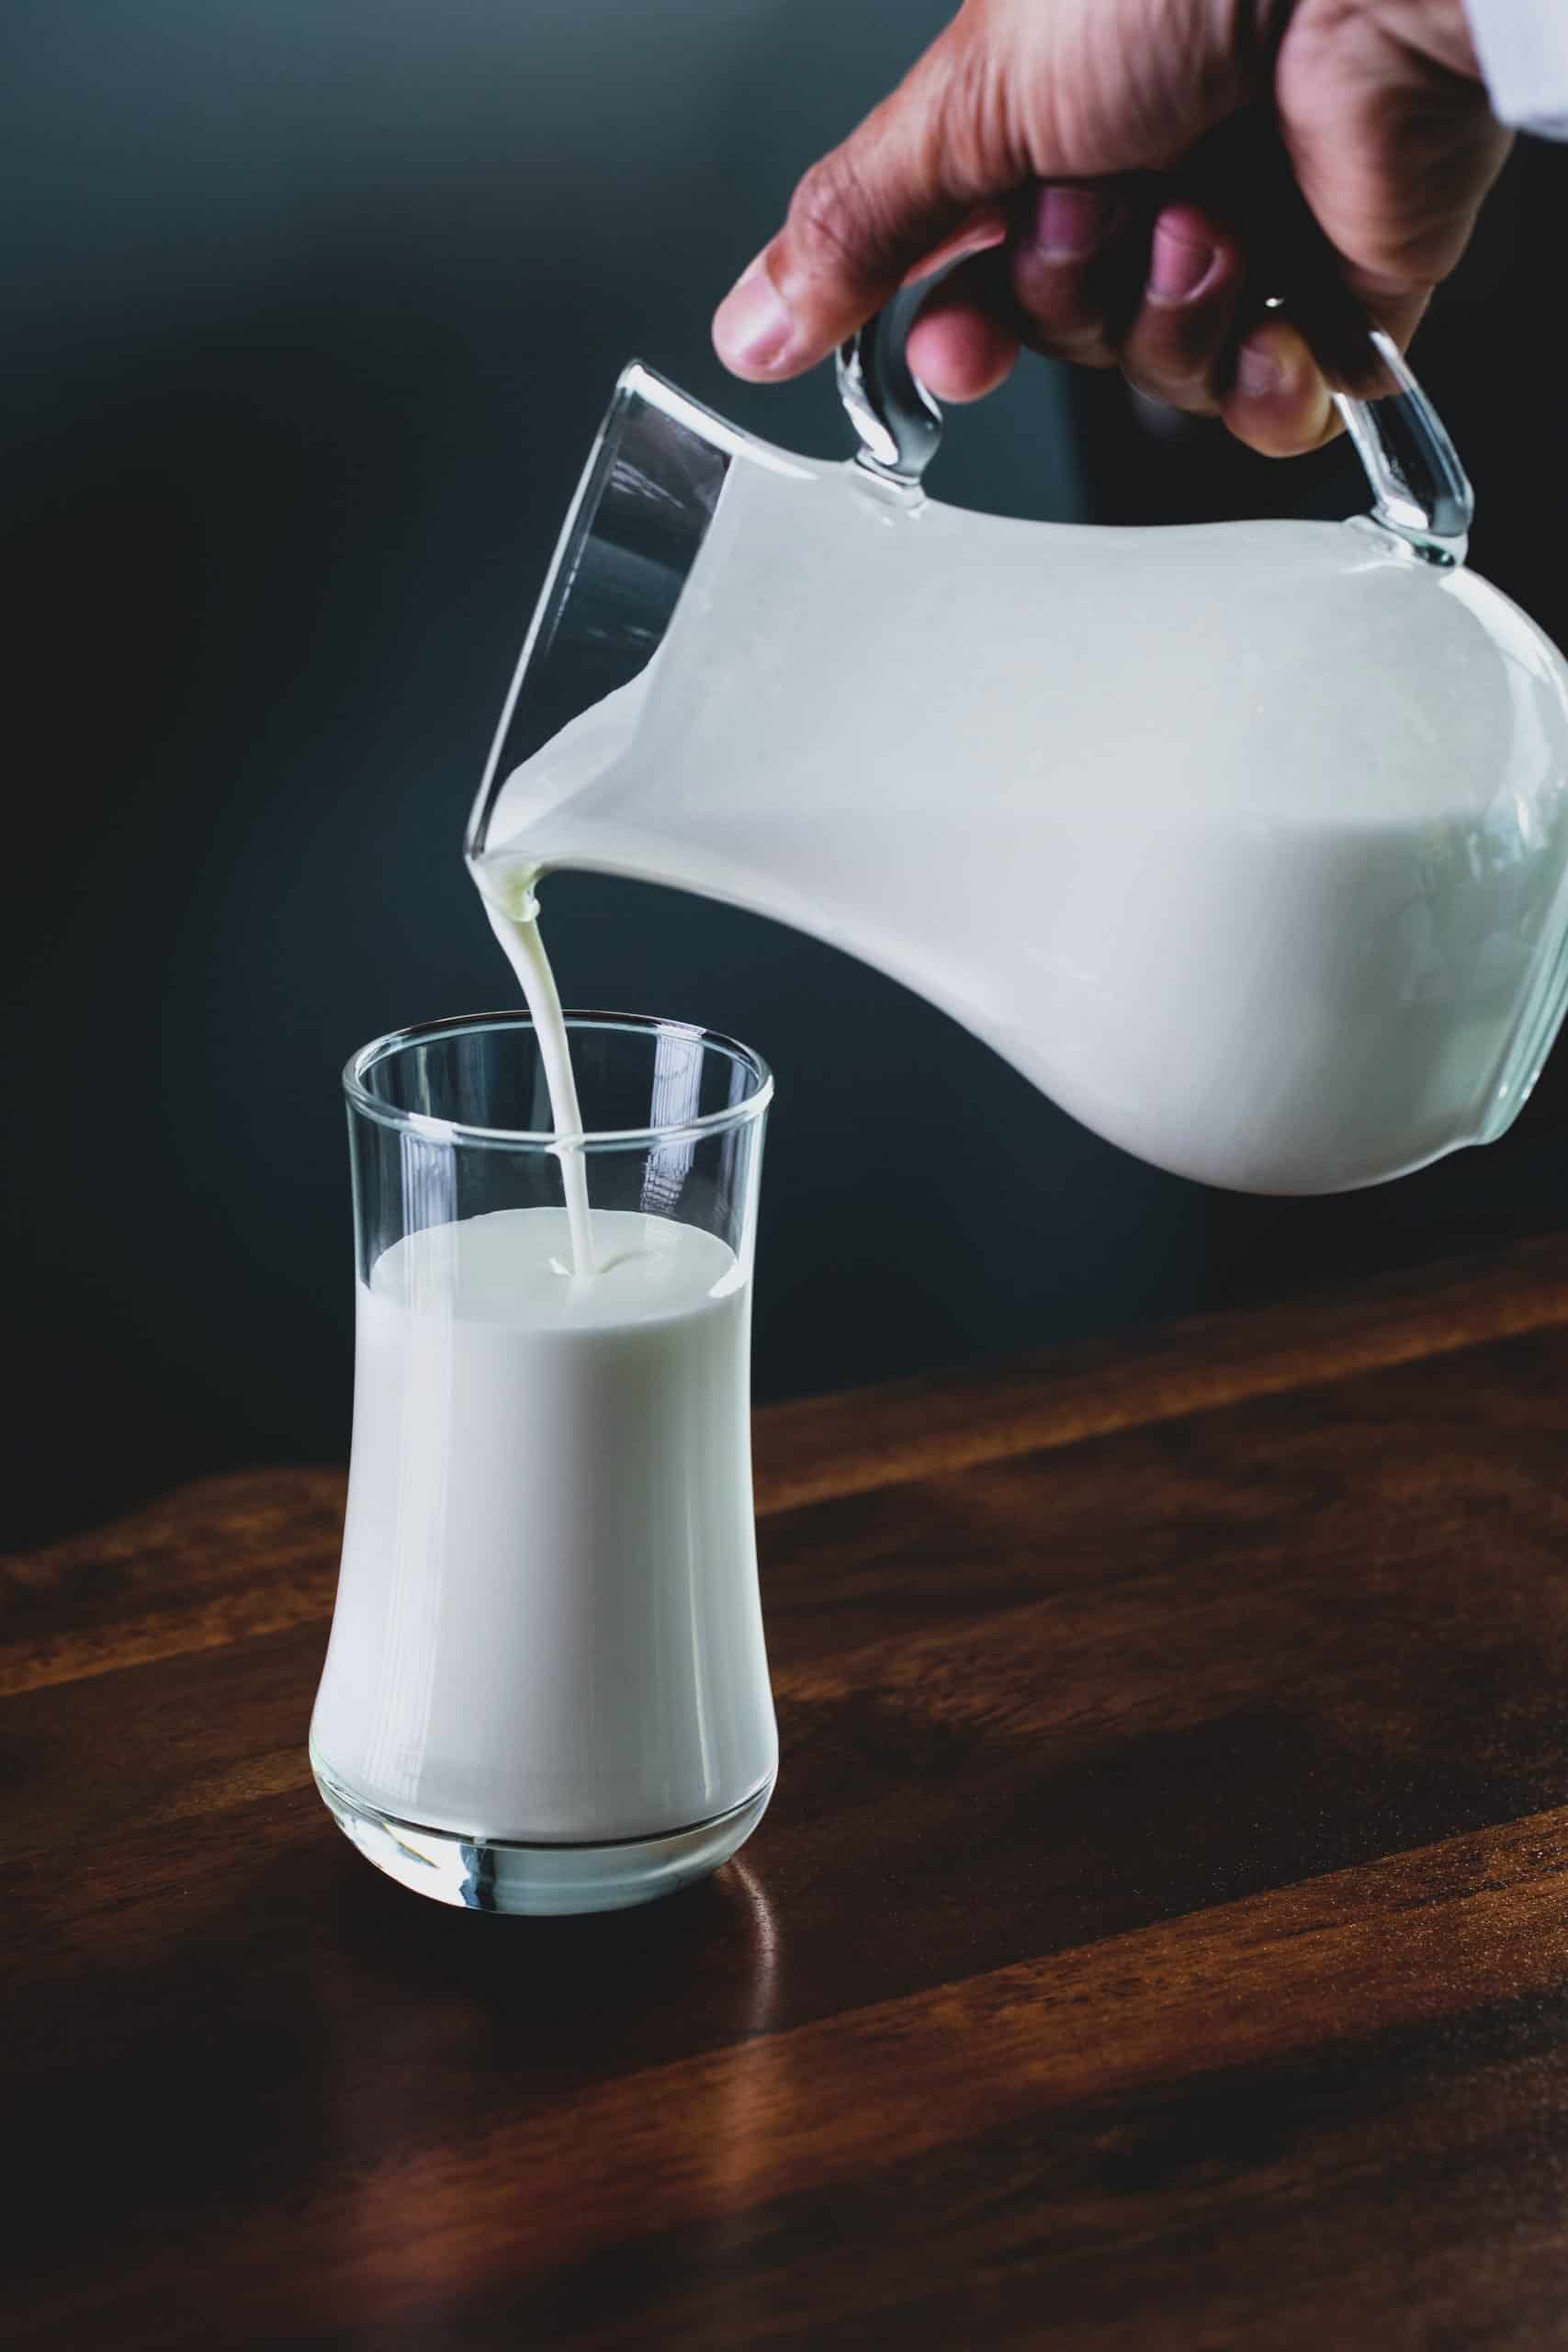 Dr Hilary Jones highlights World School Milk Day